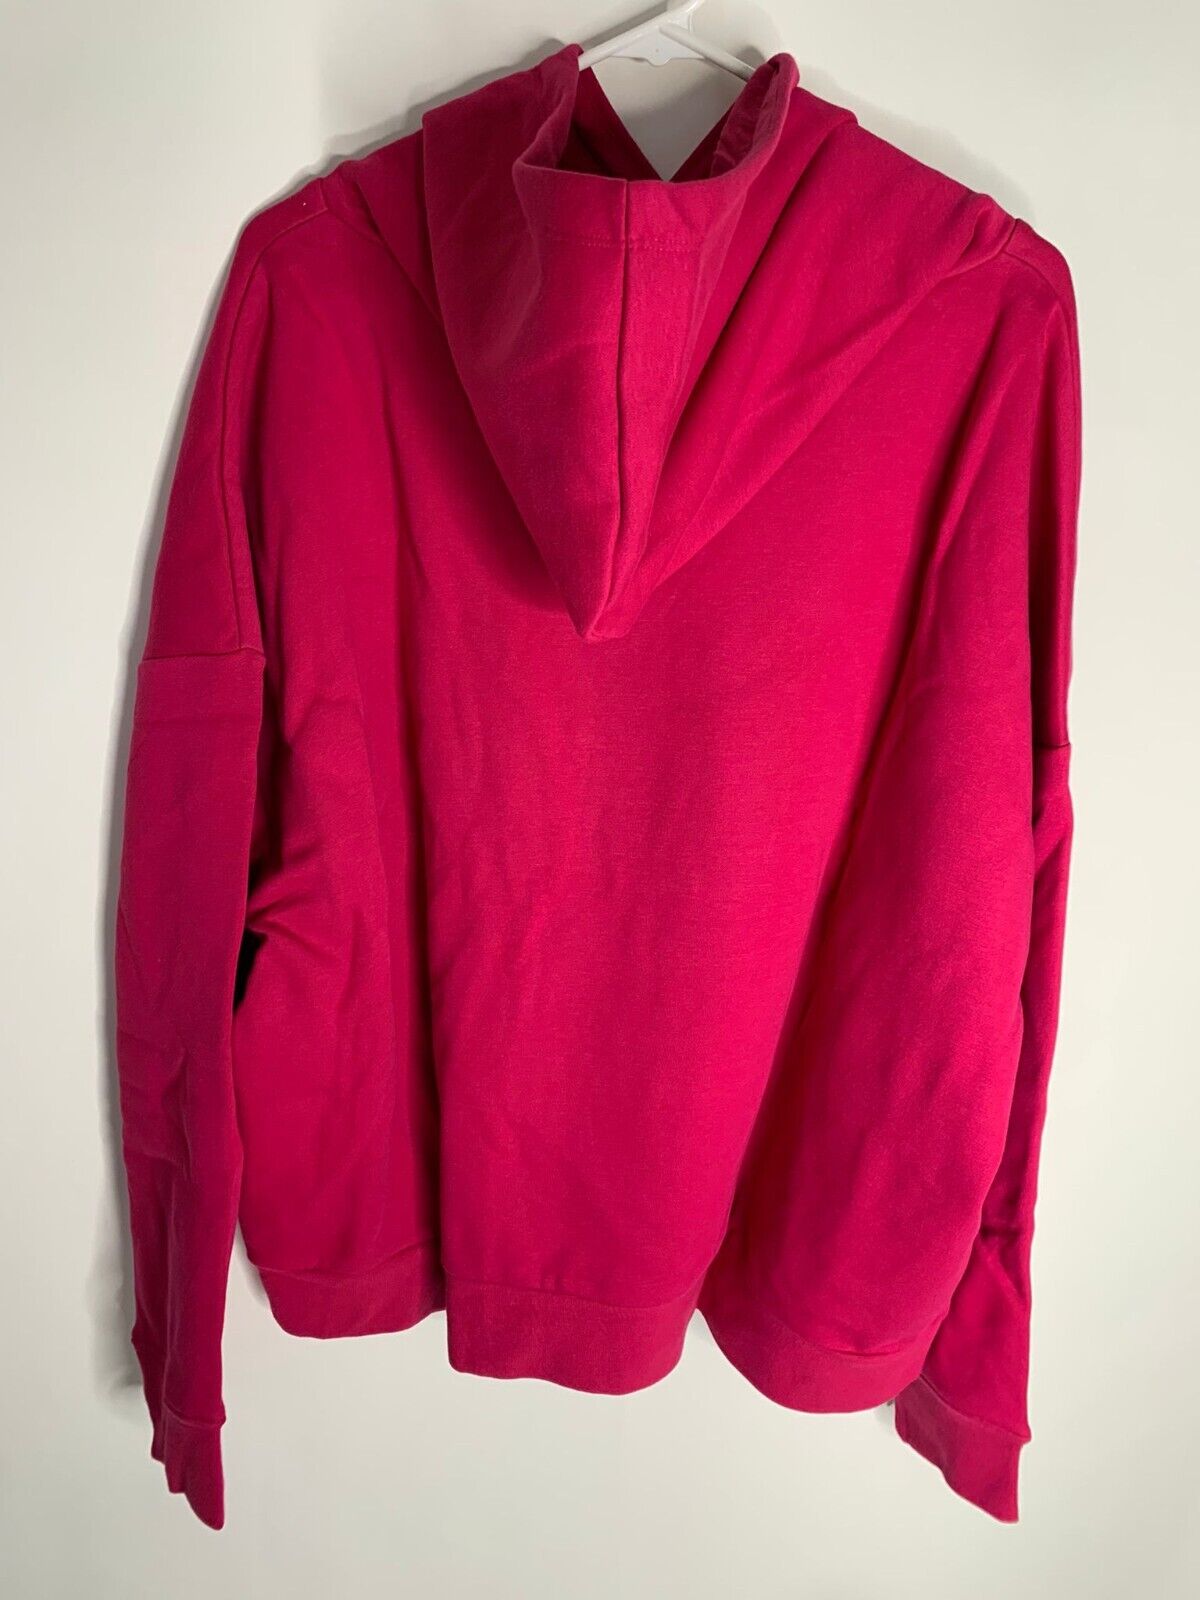 Fabletics Womens 1X The Go To Hoodie Dark Fuchsia Pink Sweatshirt